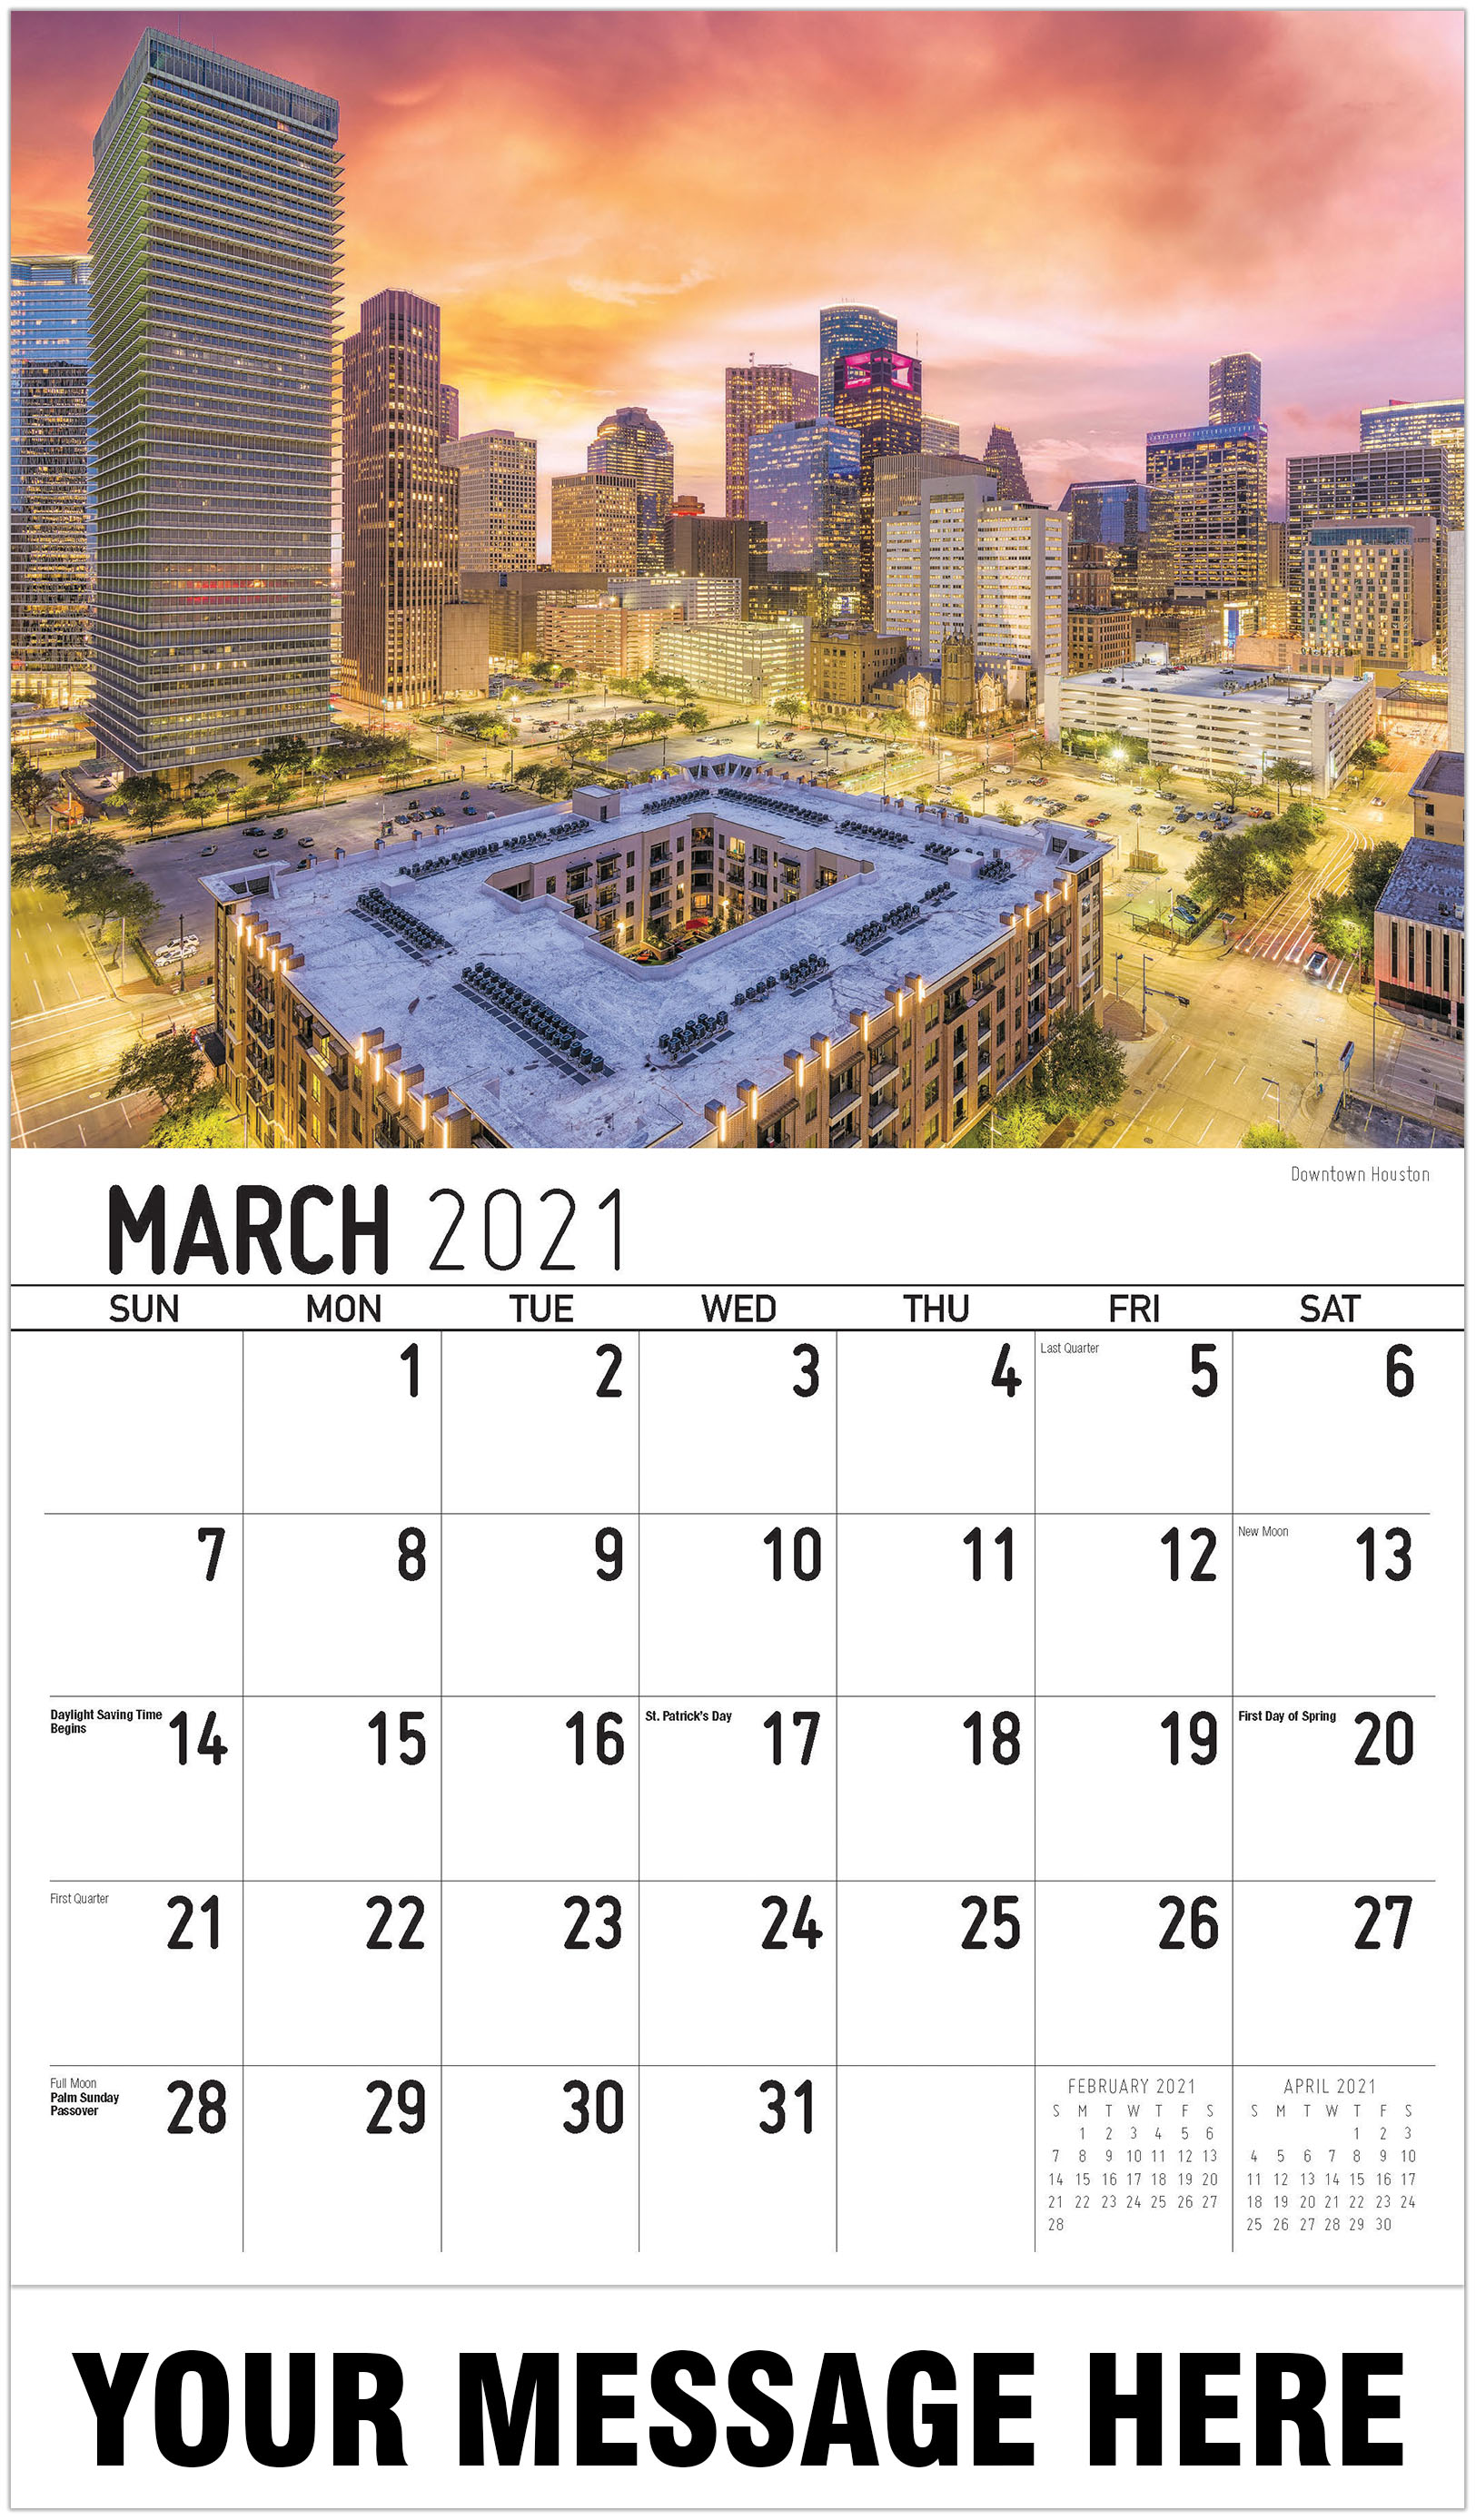 2021 Scenes of Texas Calendar | Texas State Promotional Wall Calendar